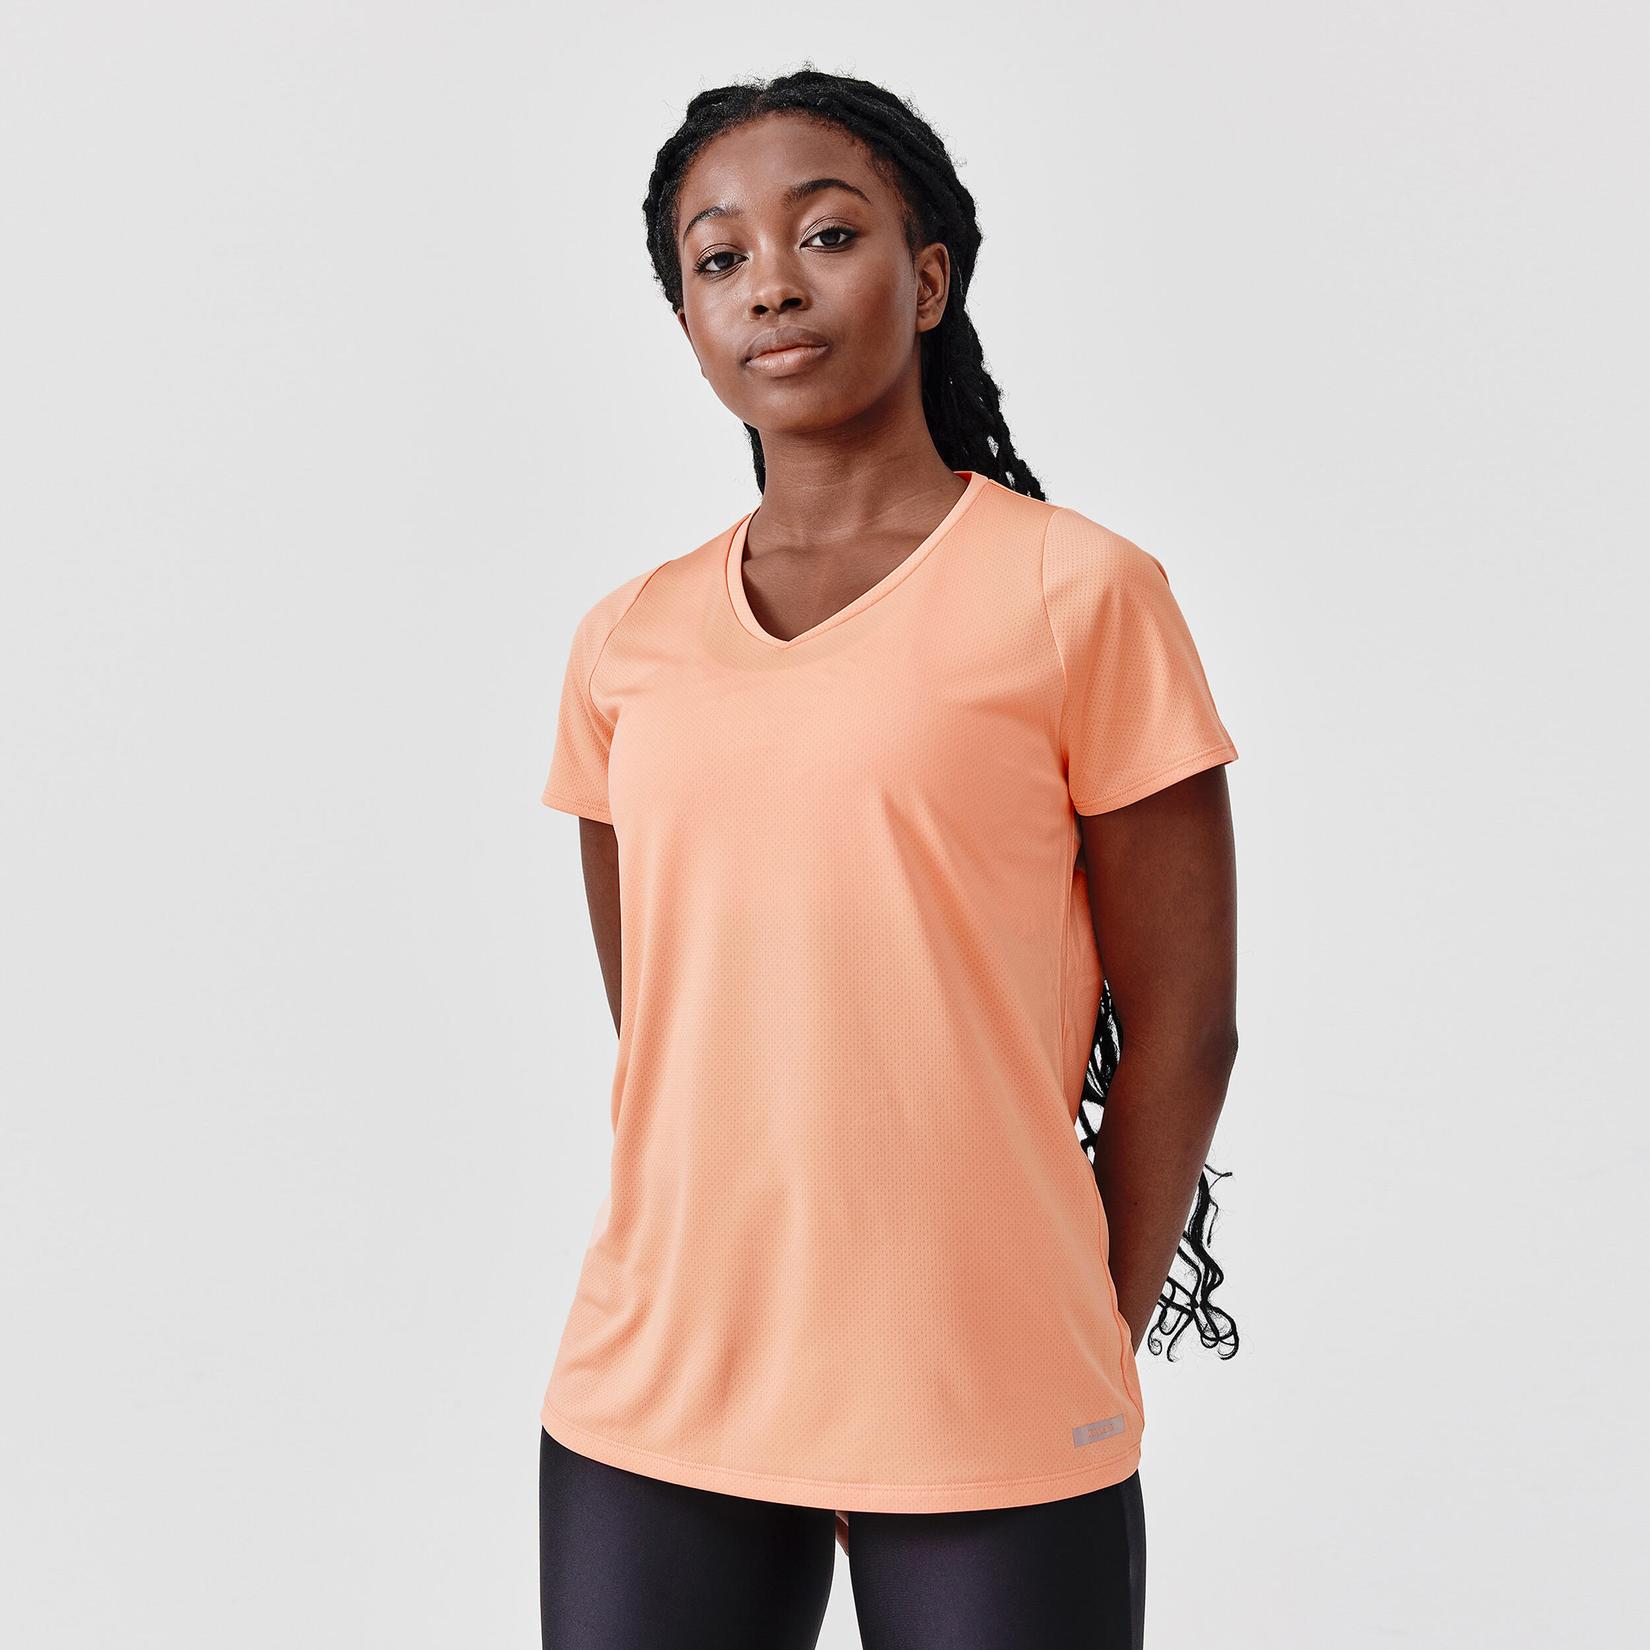 Women's Quick Dry Running T-Shirt - Orange offers at S$ 6.9 in Decathlon